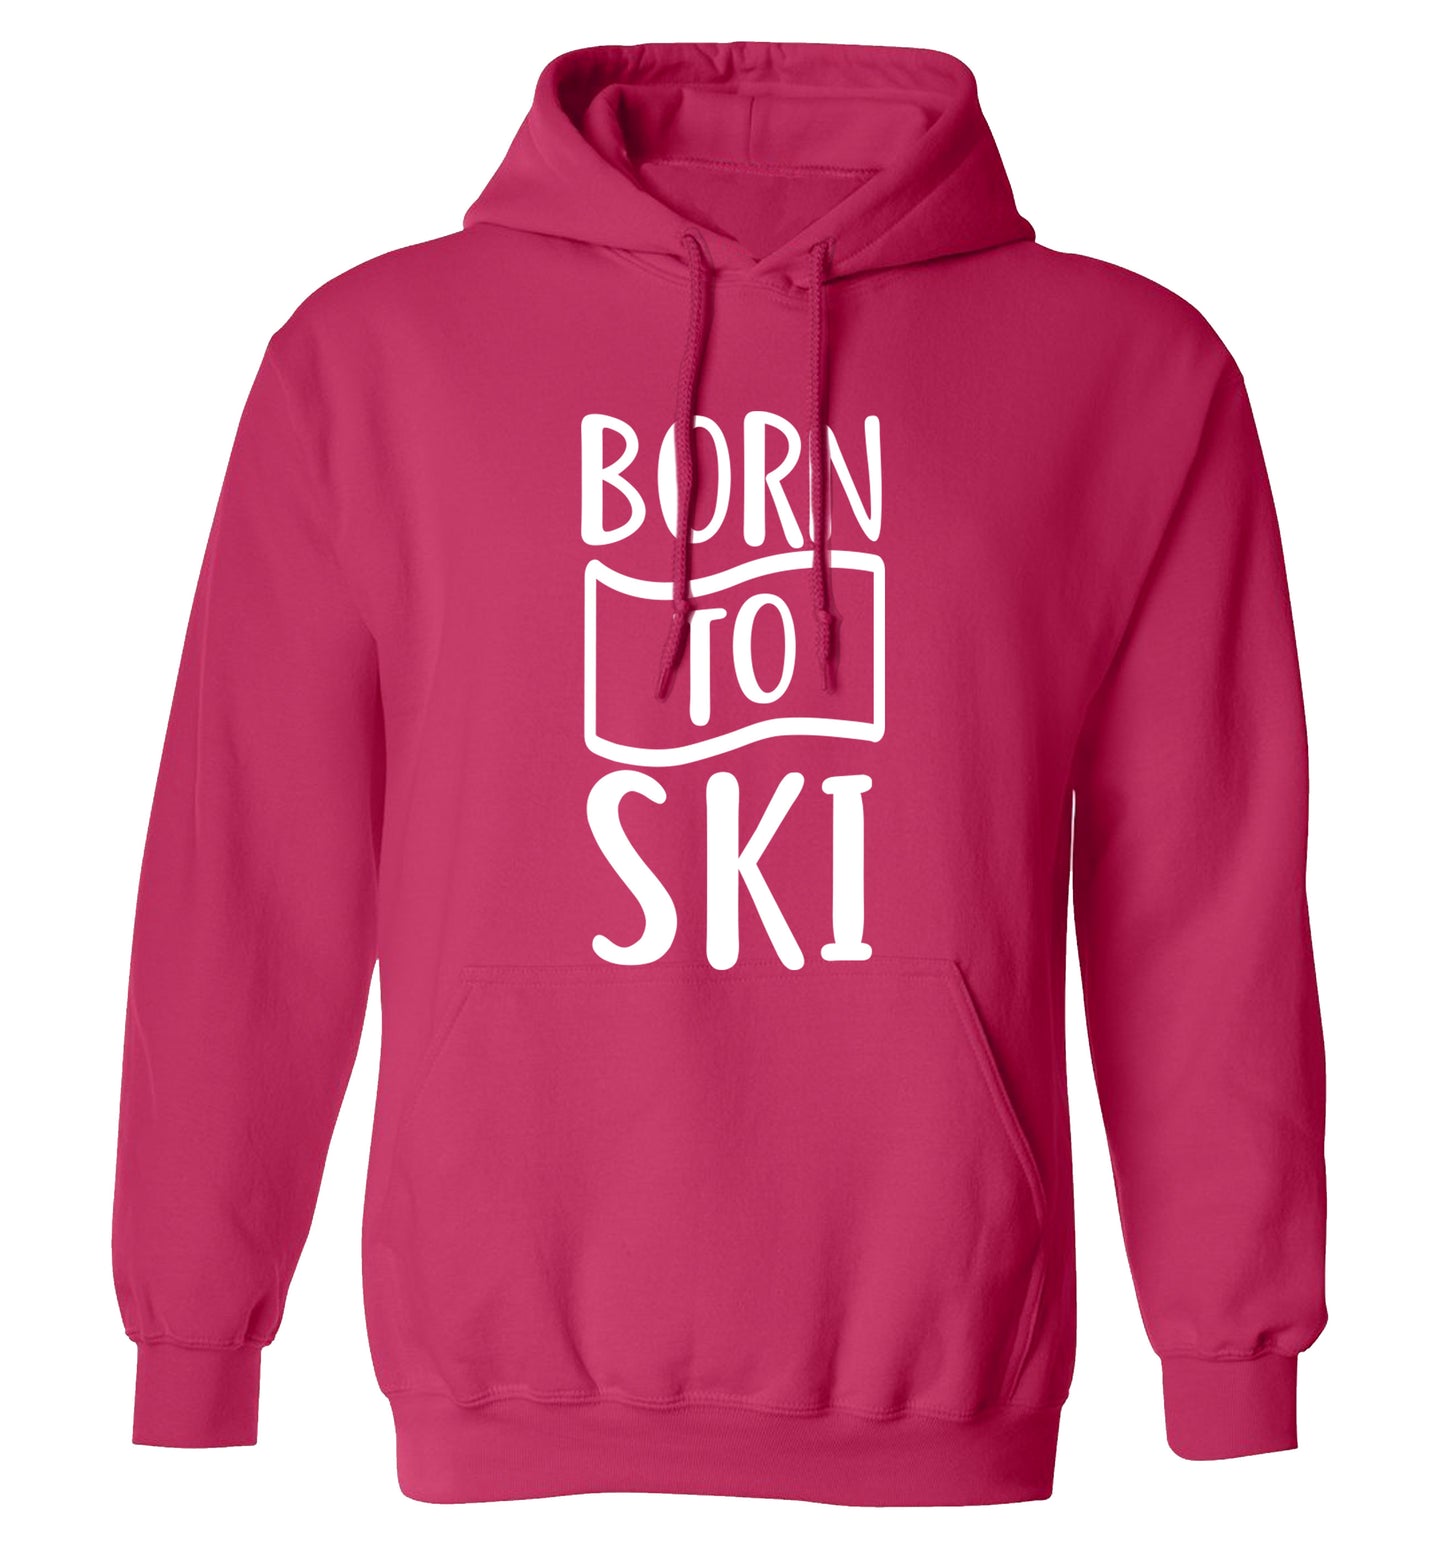 Born to ski adults unisexpink hoodie 2XL